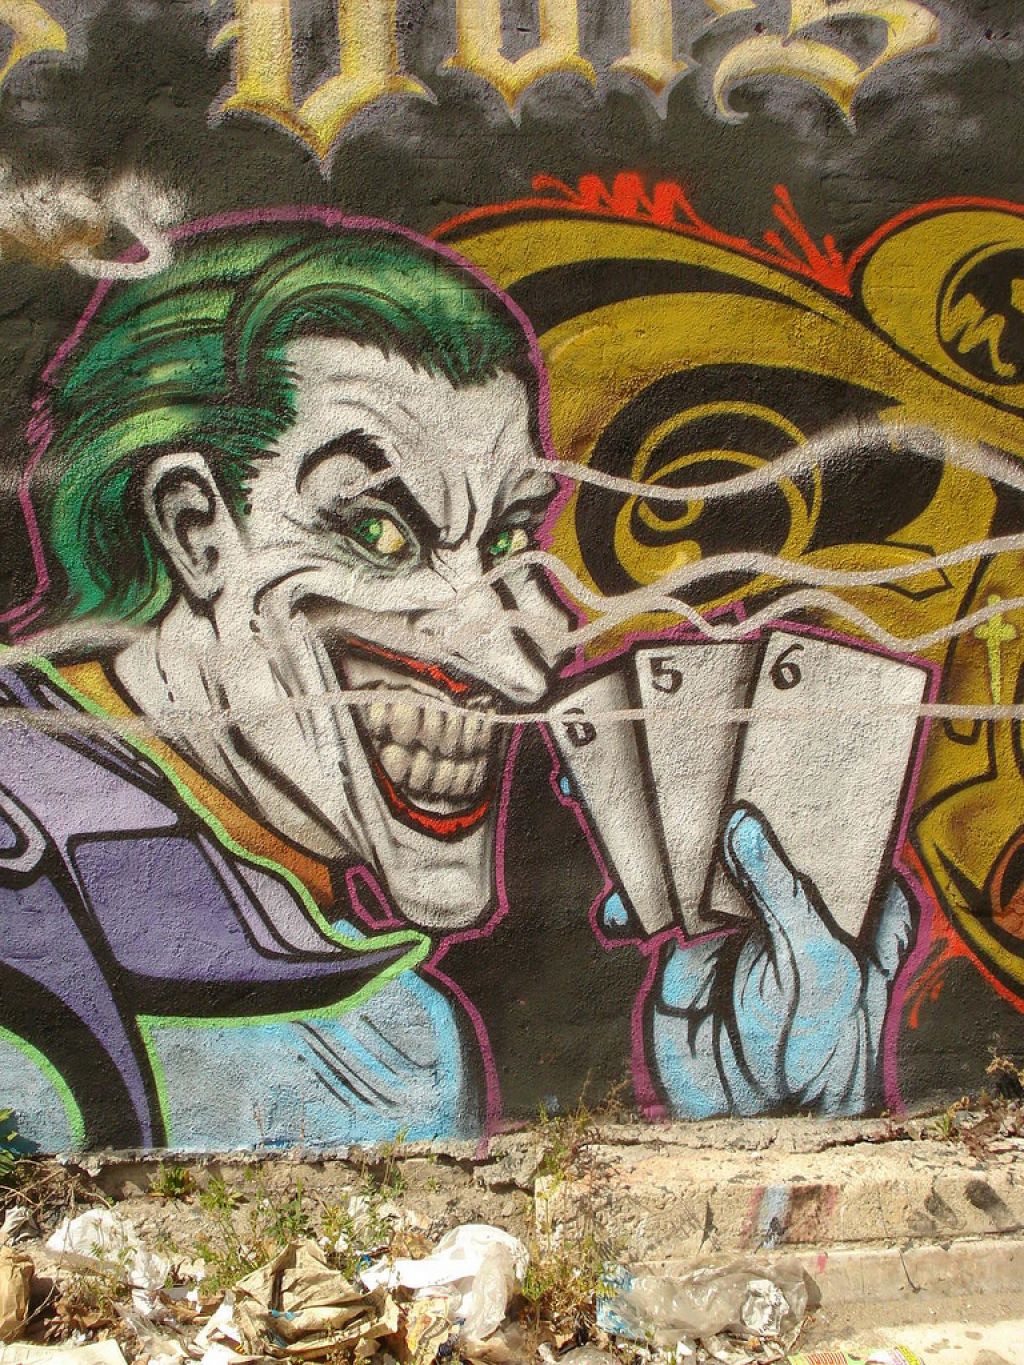 graffiti art6 Street Art and Graffiti in Los Angeles